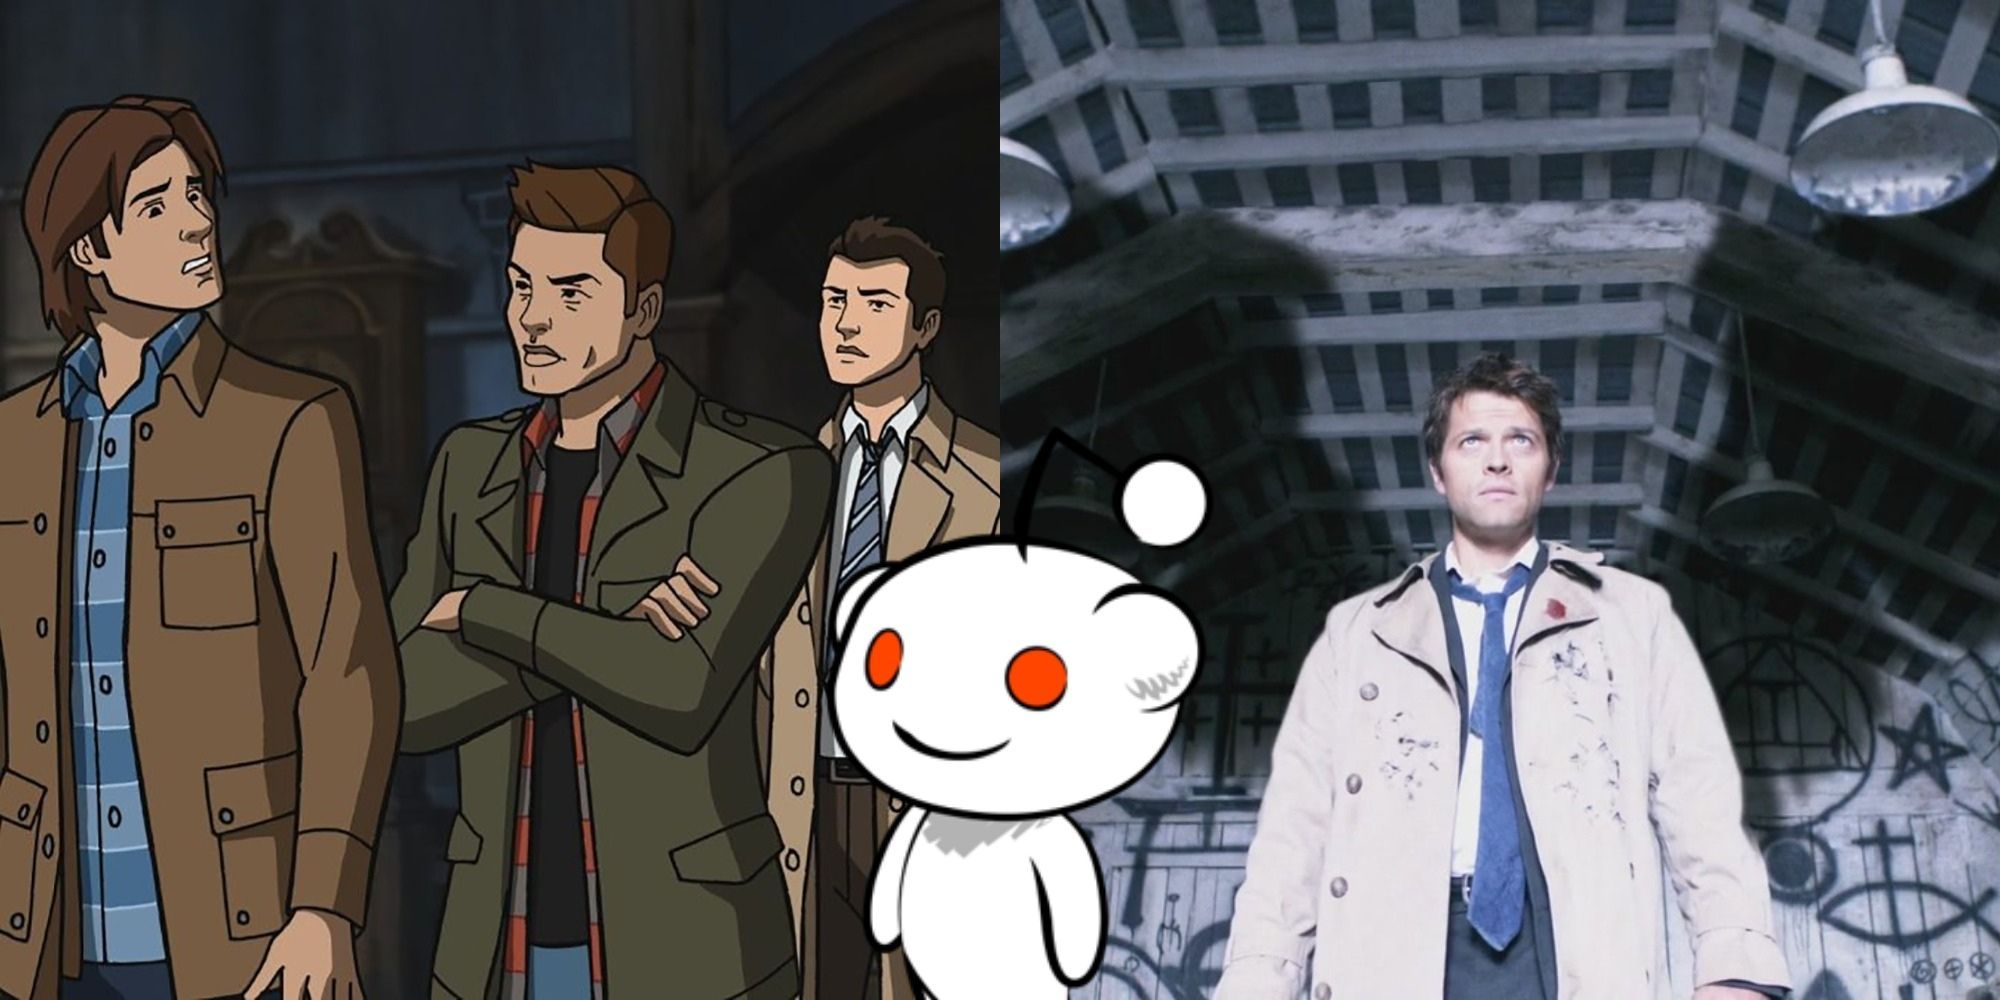 Supernatural The 10 Best Episodes According To Reddit